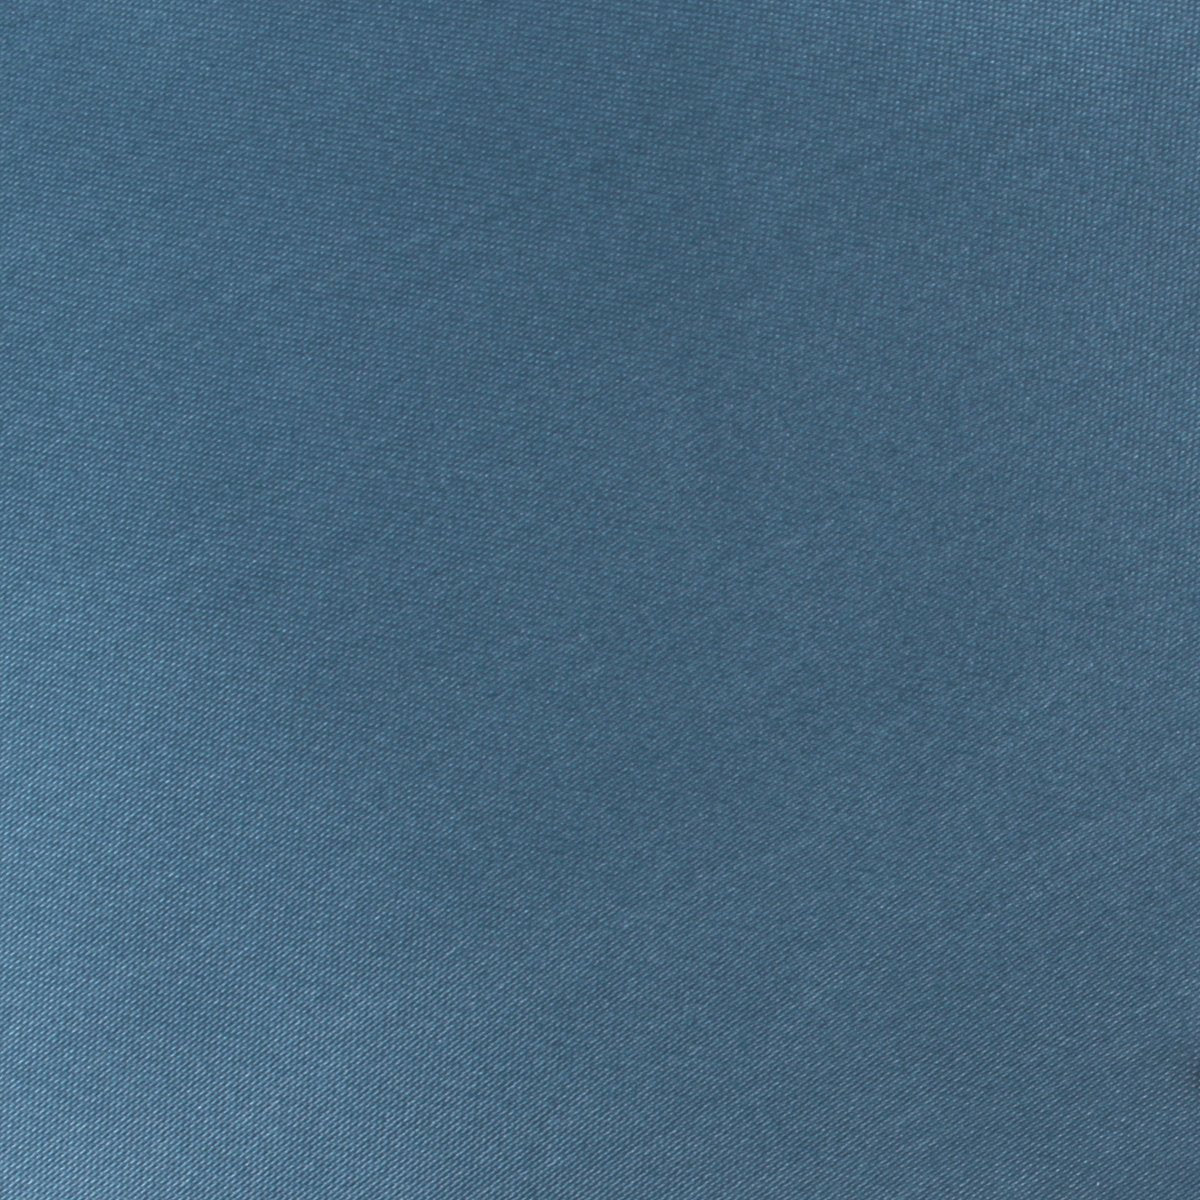 Coastal Blue Satin Skinny Tie Fabric